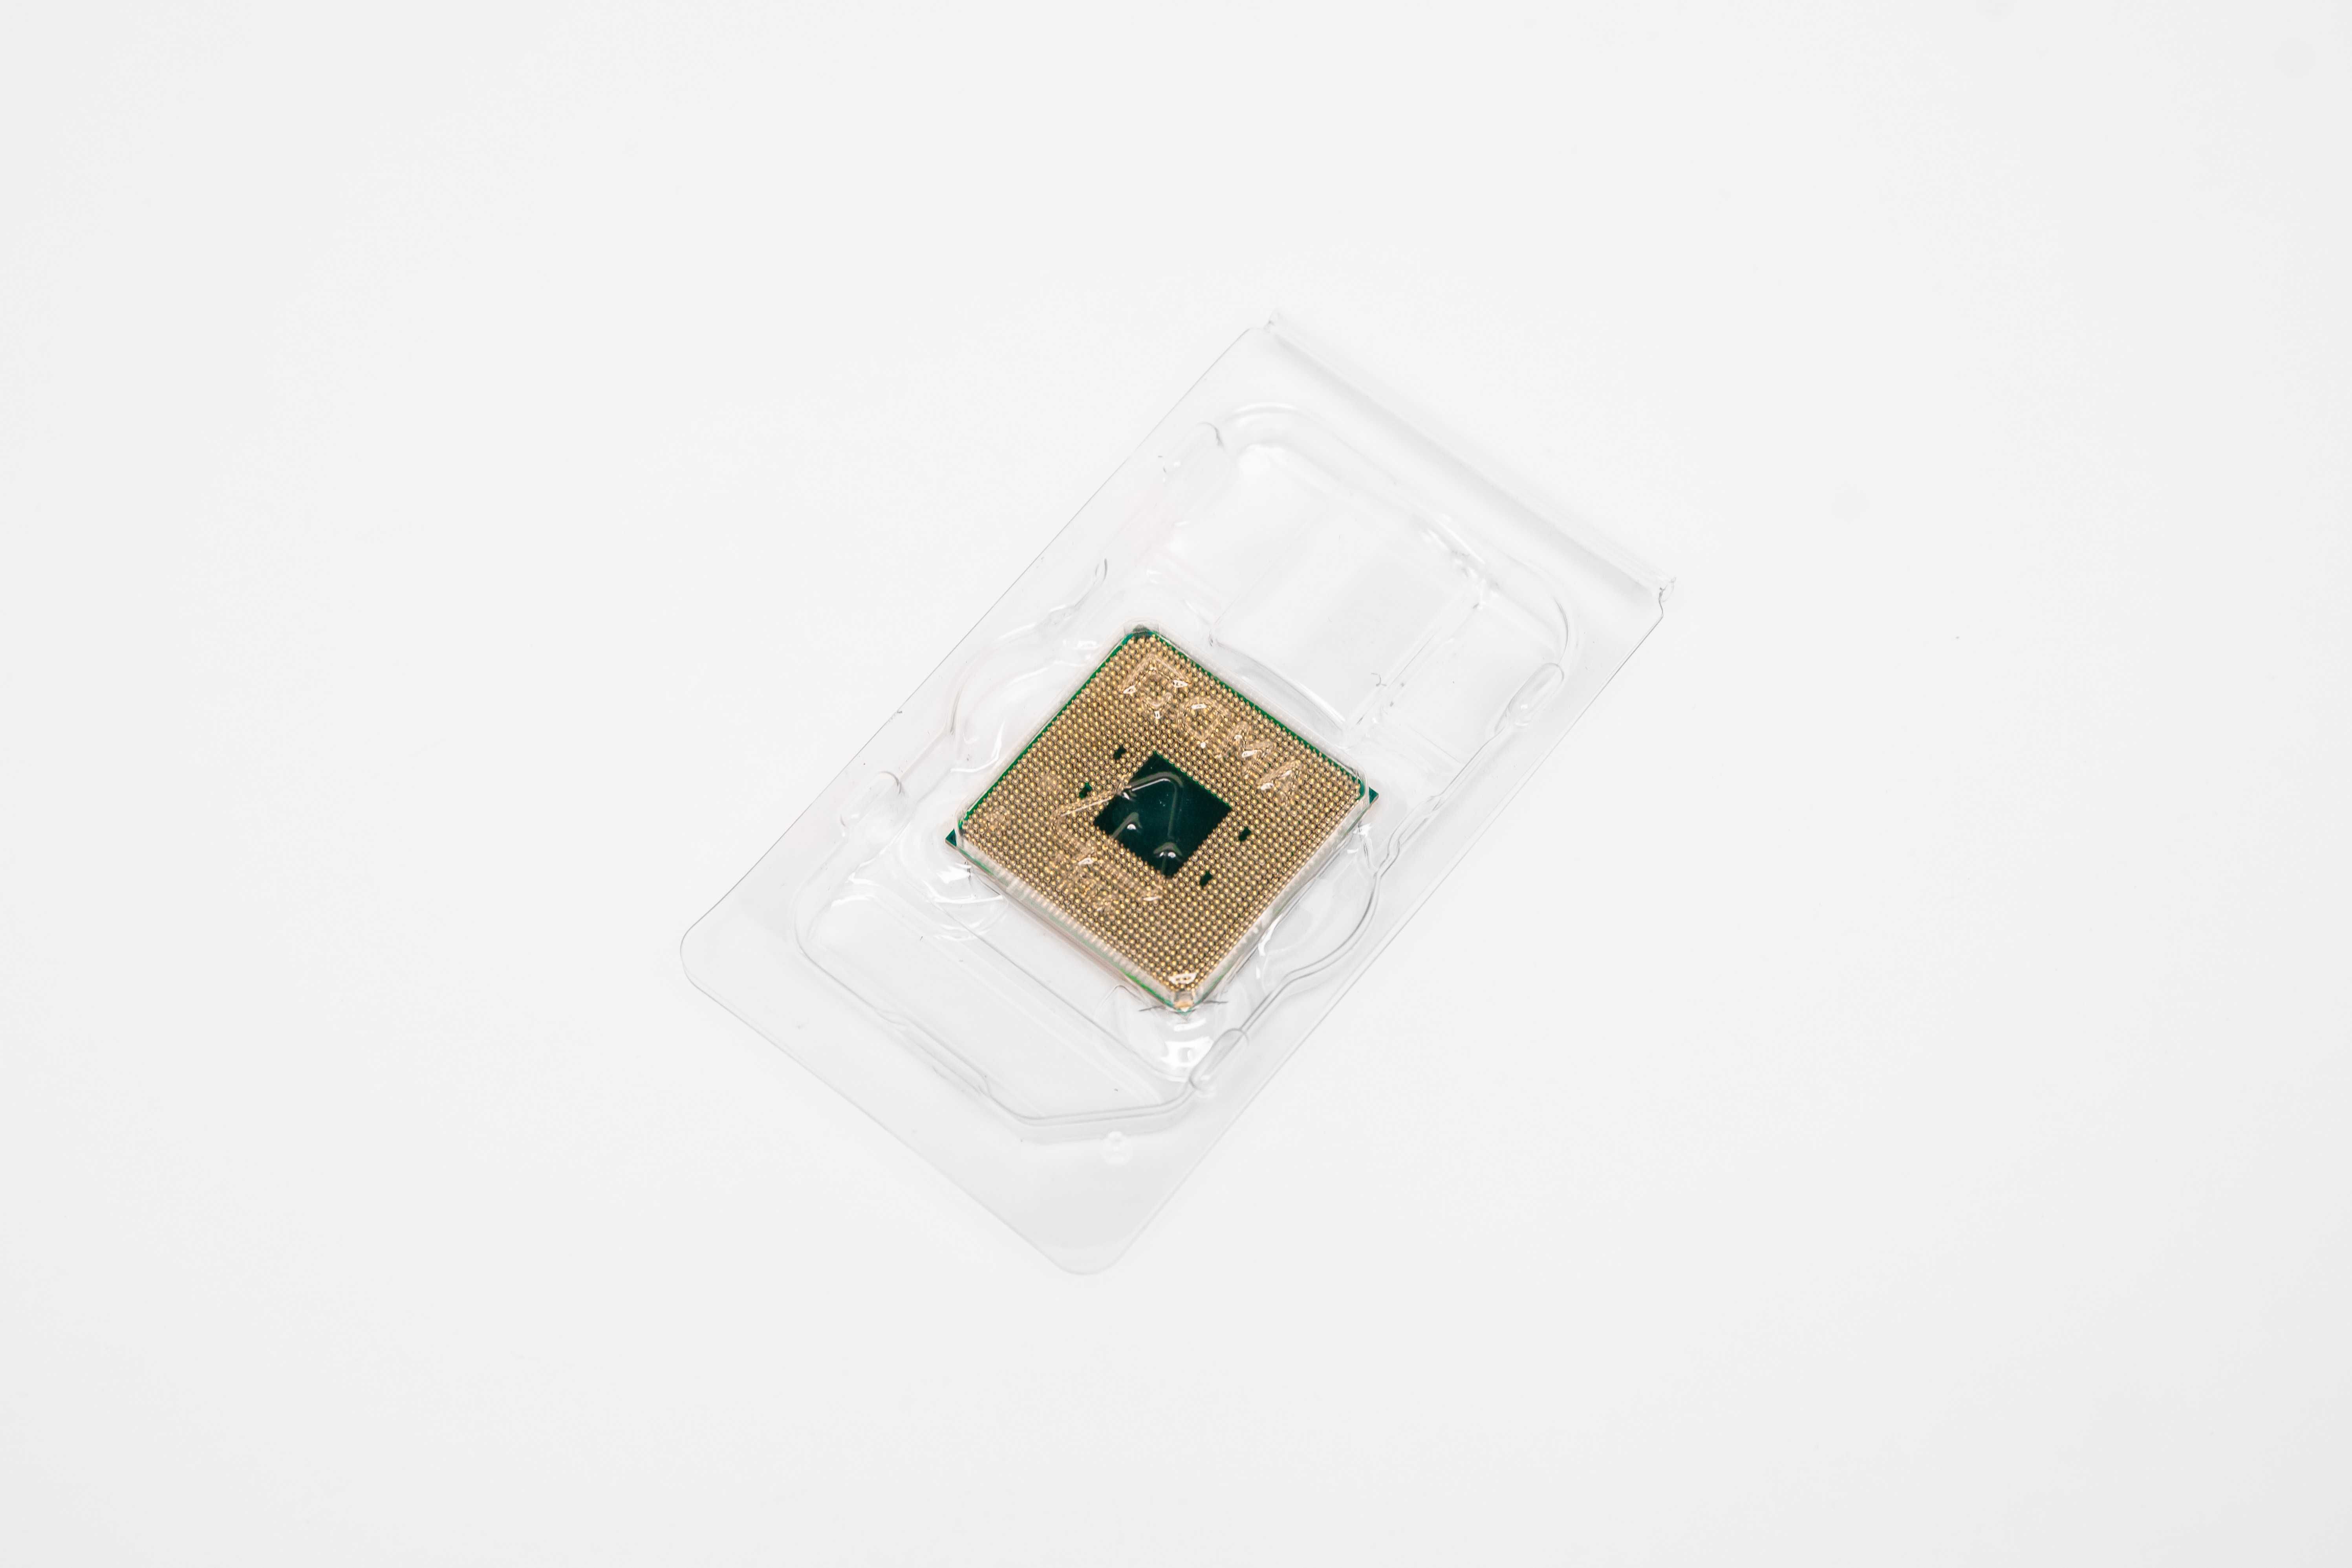 Processador AMD Ryzen 5 2600 3.4 Ghz